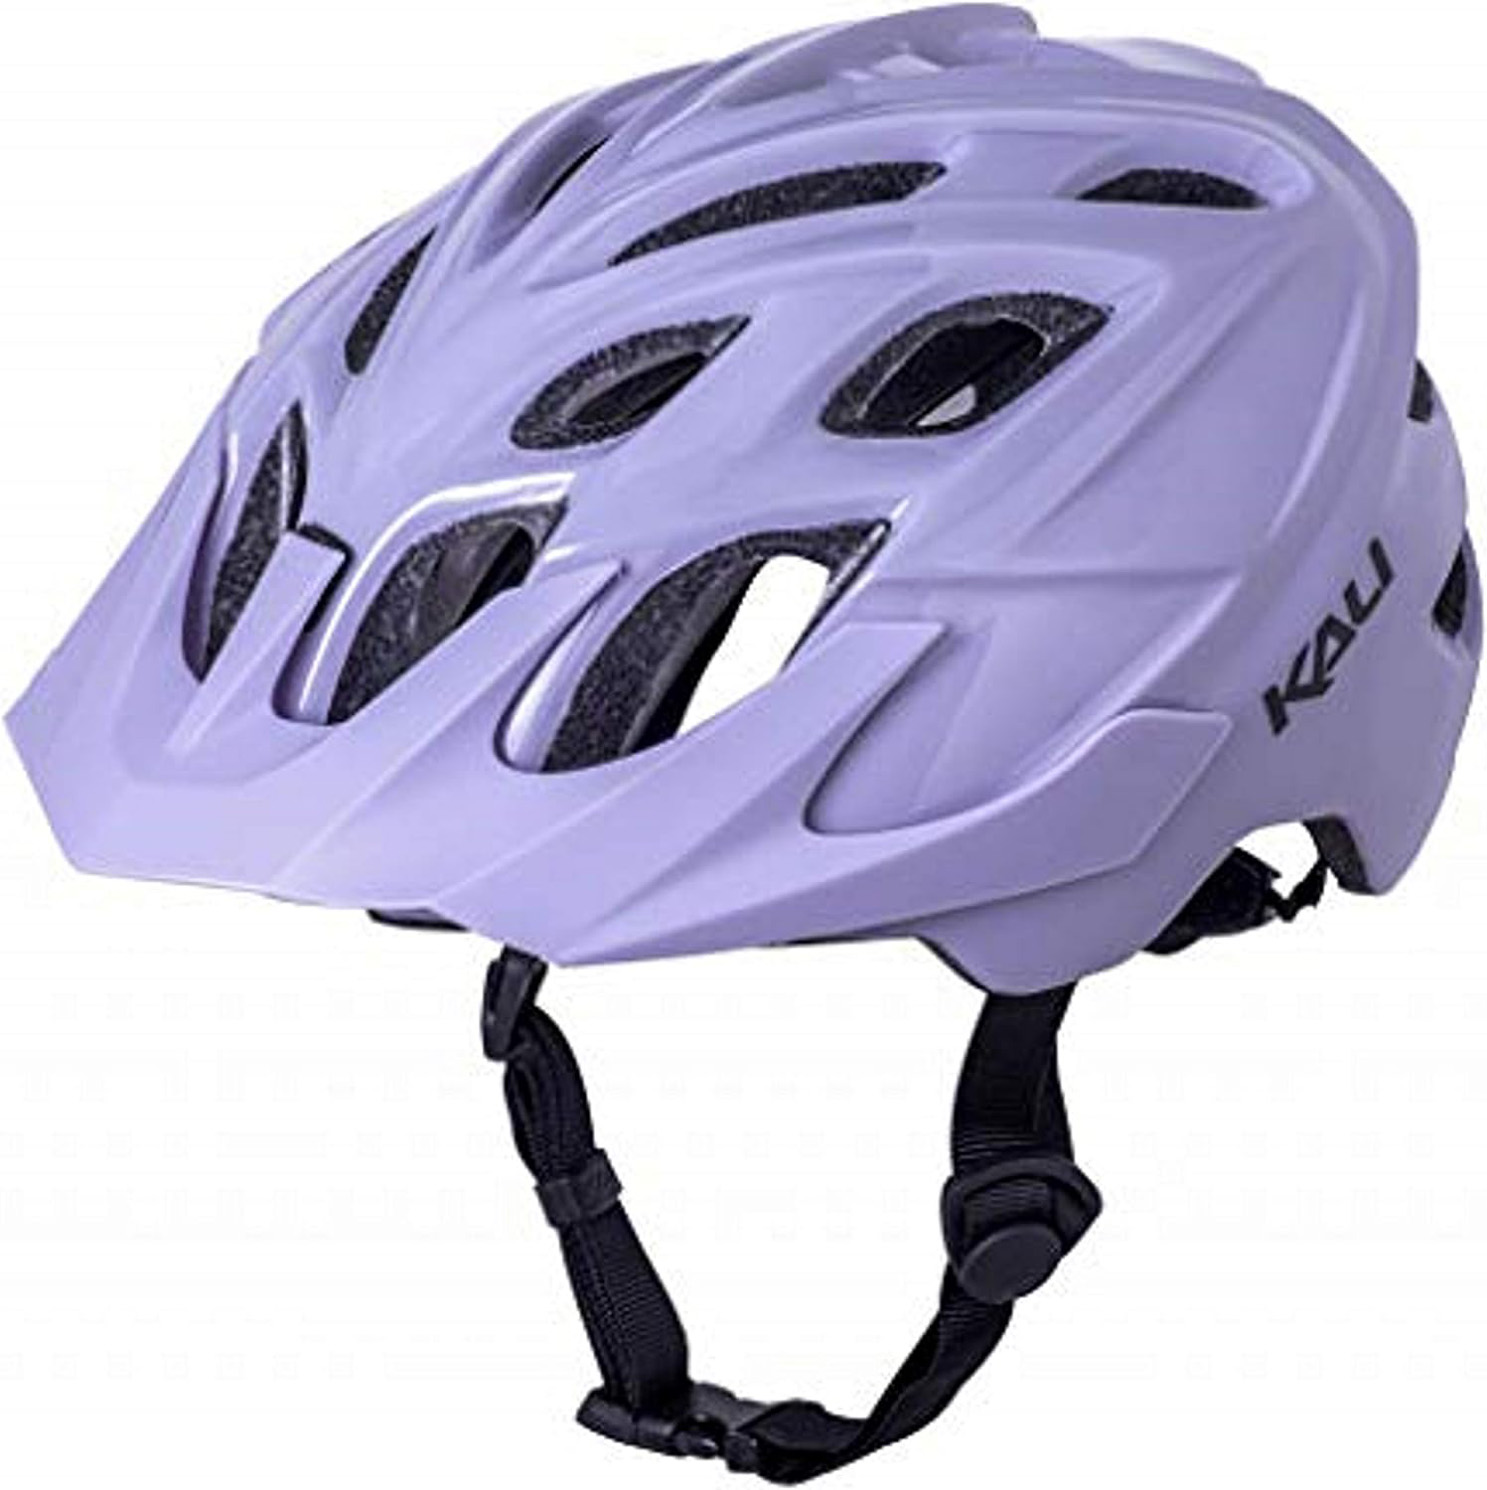 Kali Protectives Chakra Solo Helmet Dial-Fit Closure Pastel Purple